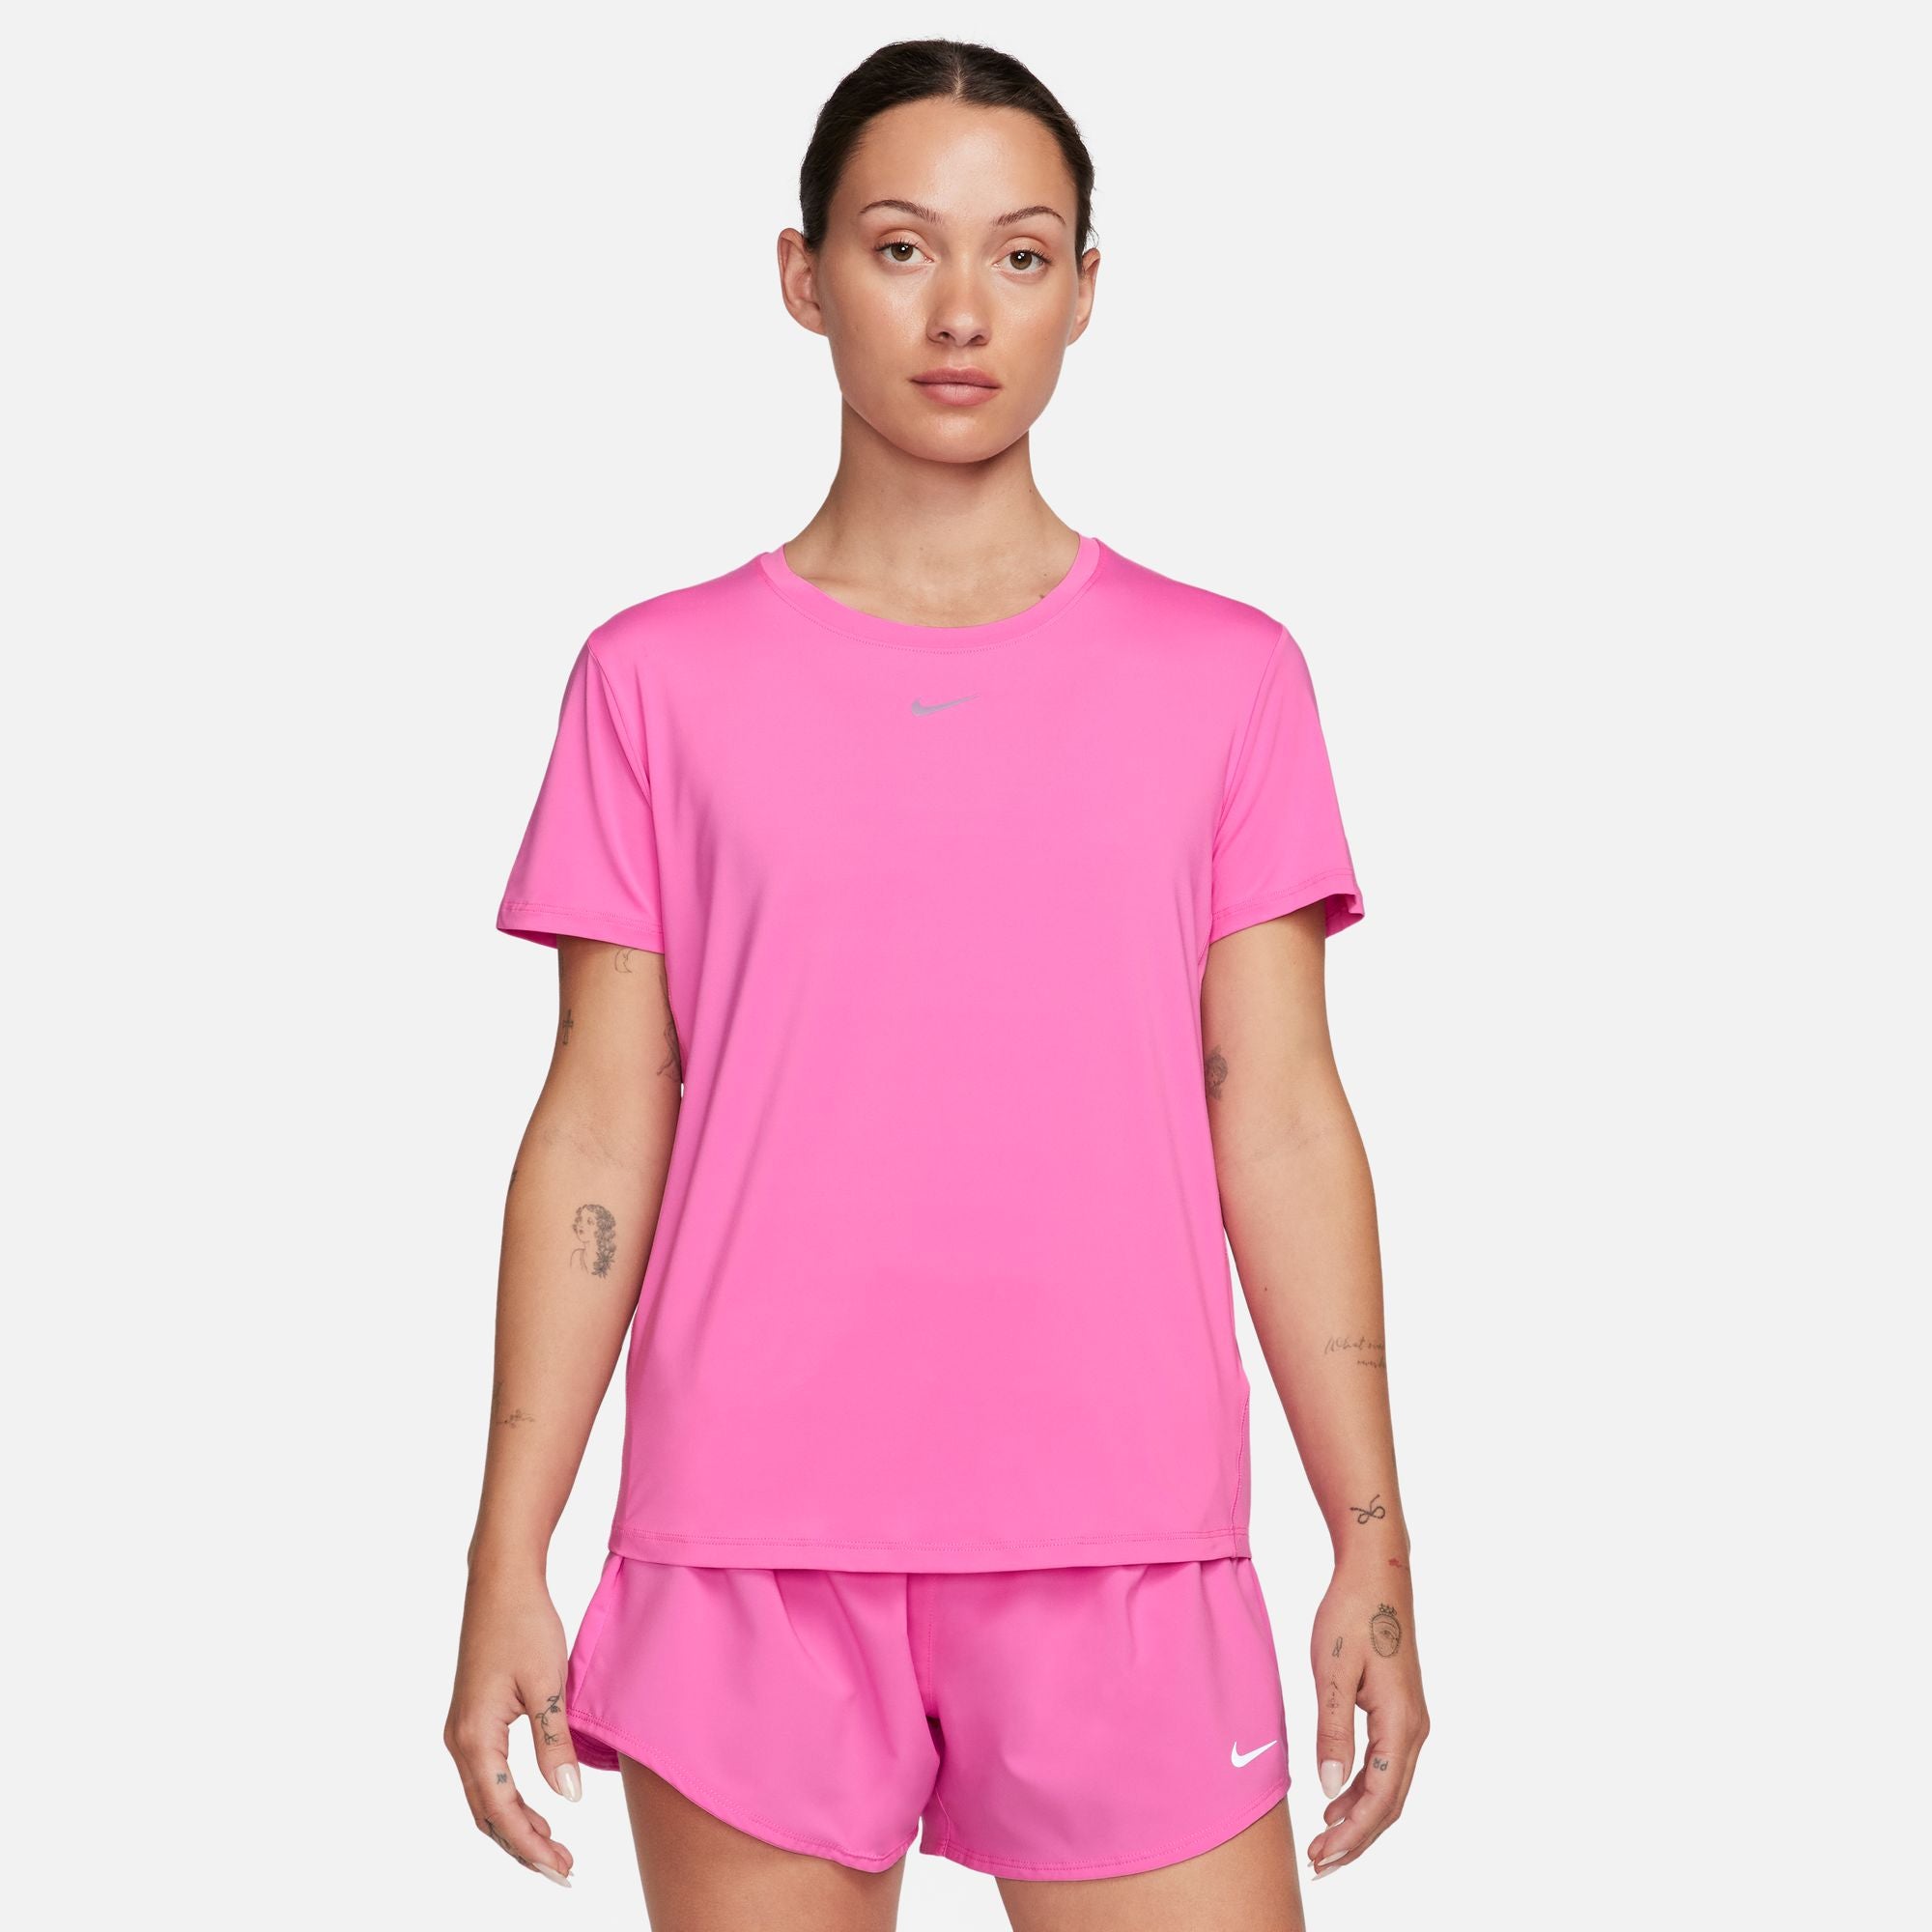 Womens Medium Nike Dri Fit Long Sleeve Fuchsia Crew Sweater Shirt $85  589296-691 on eBid United States